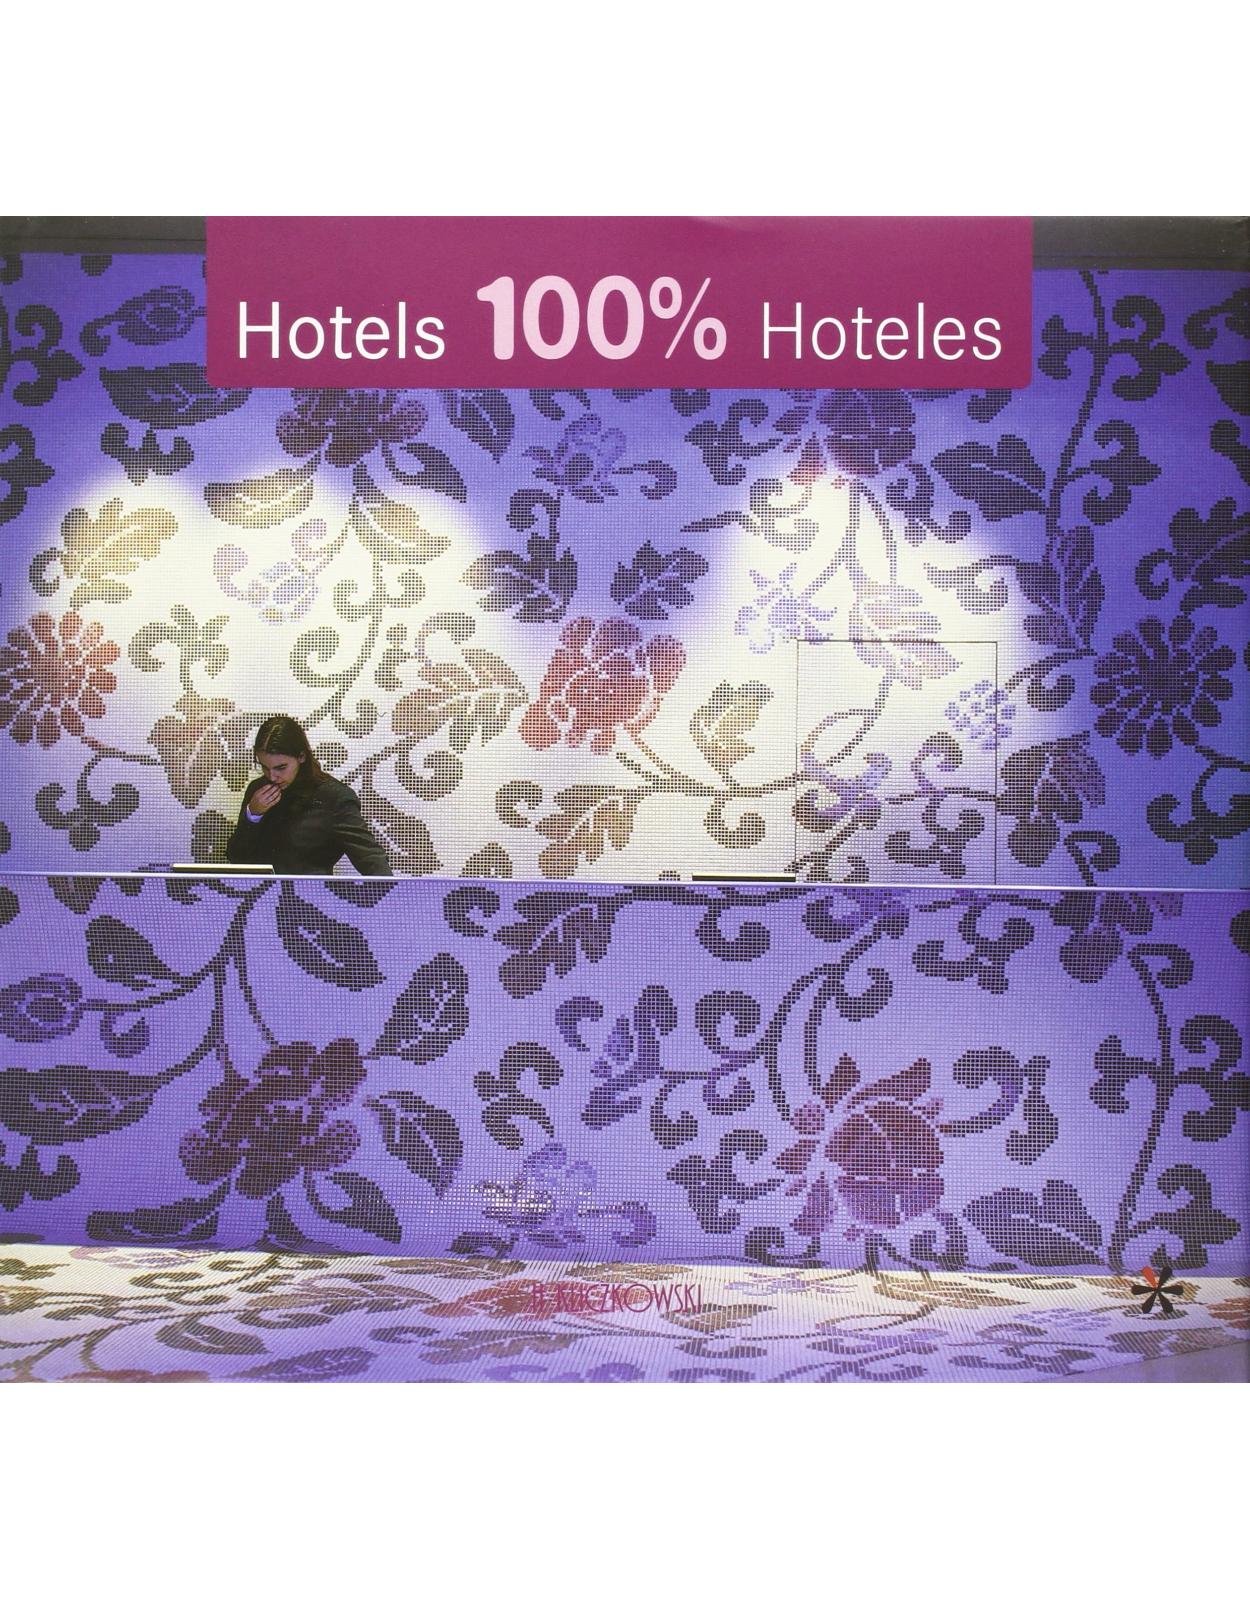 Hotels 100% Hoteles